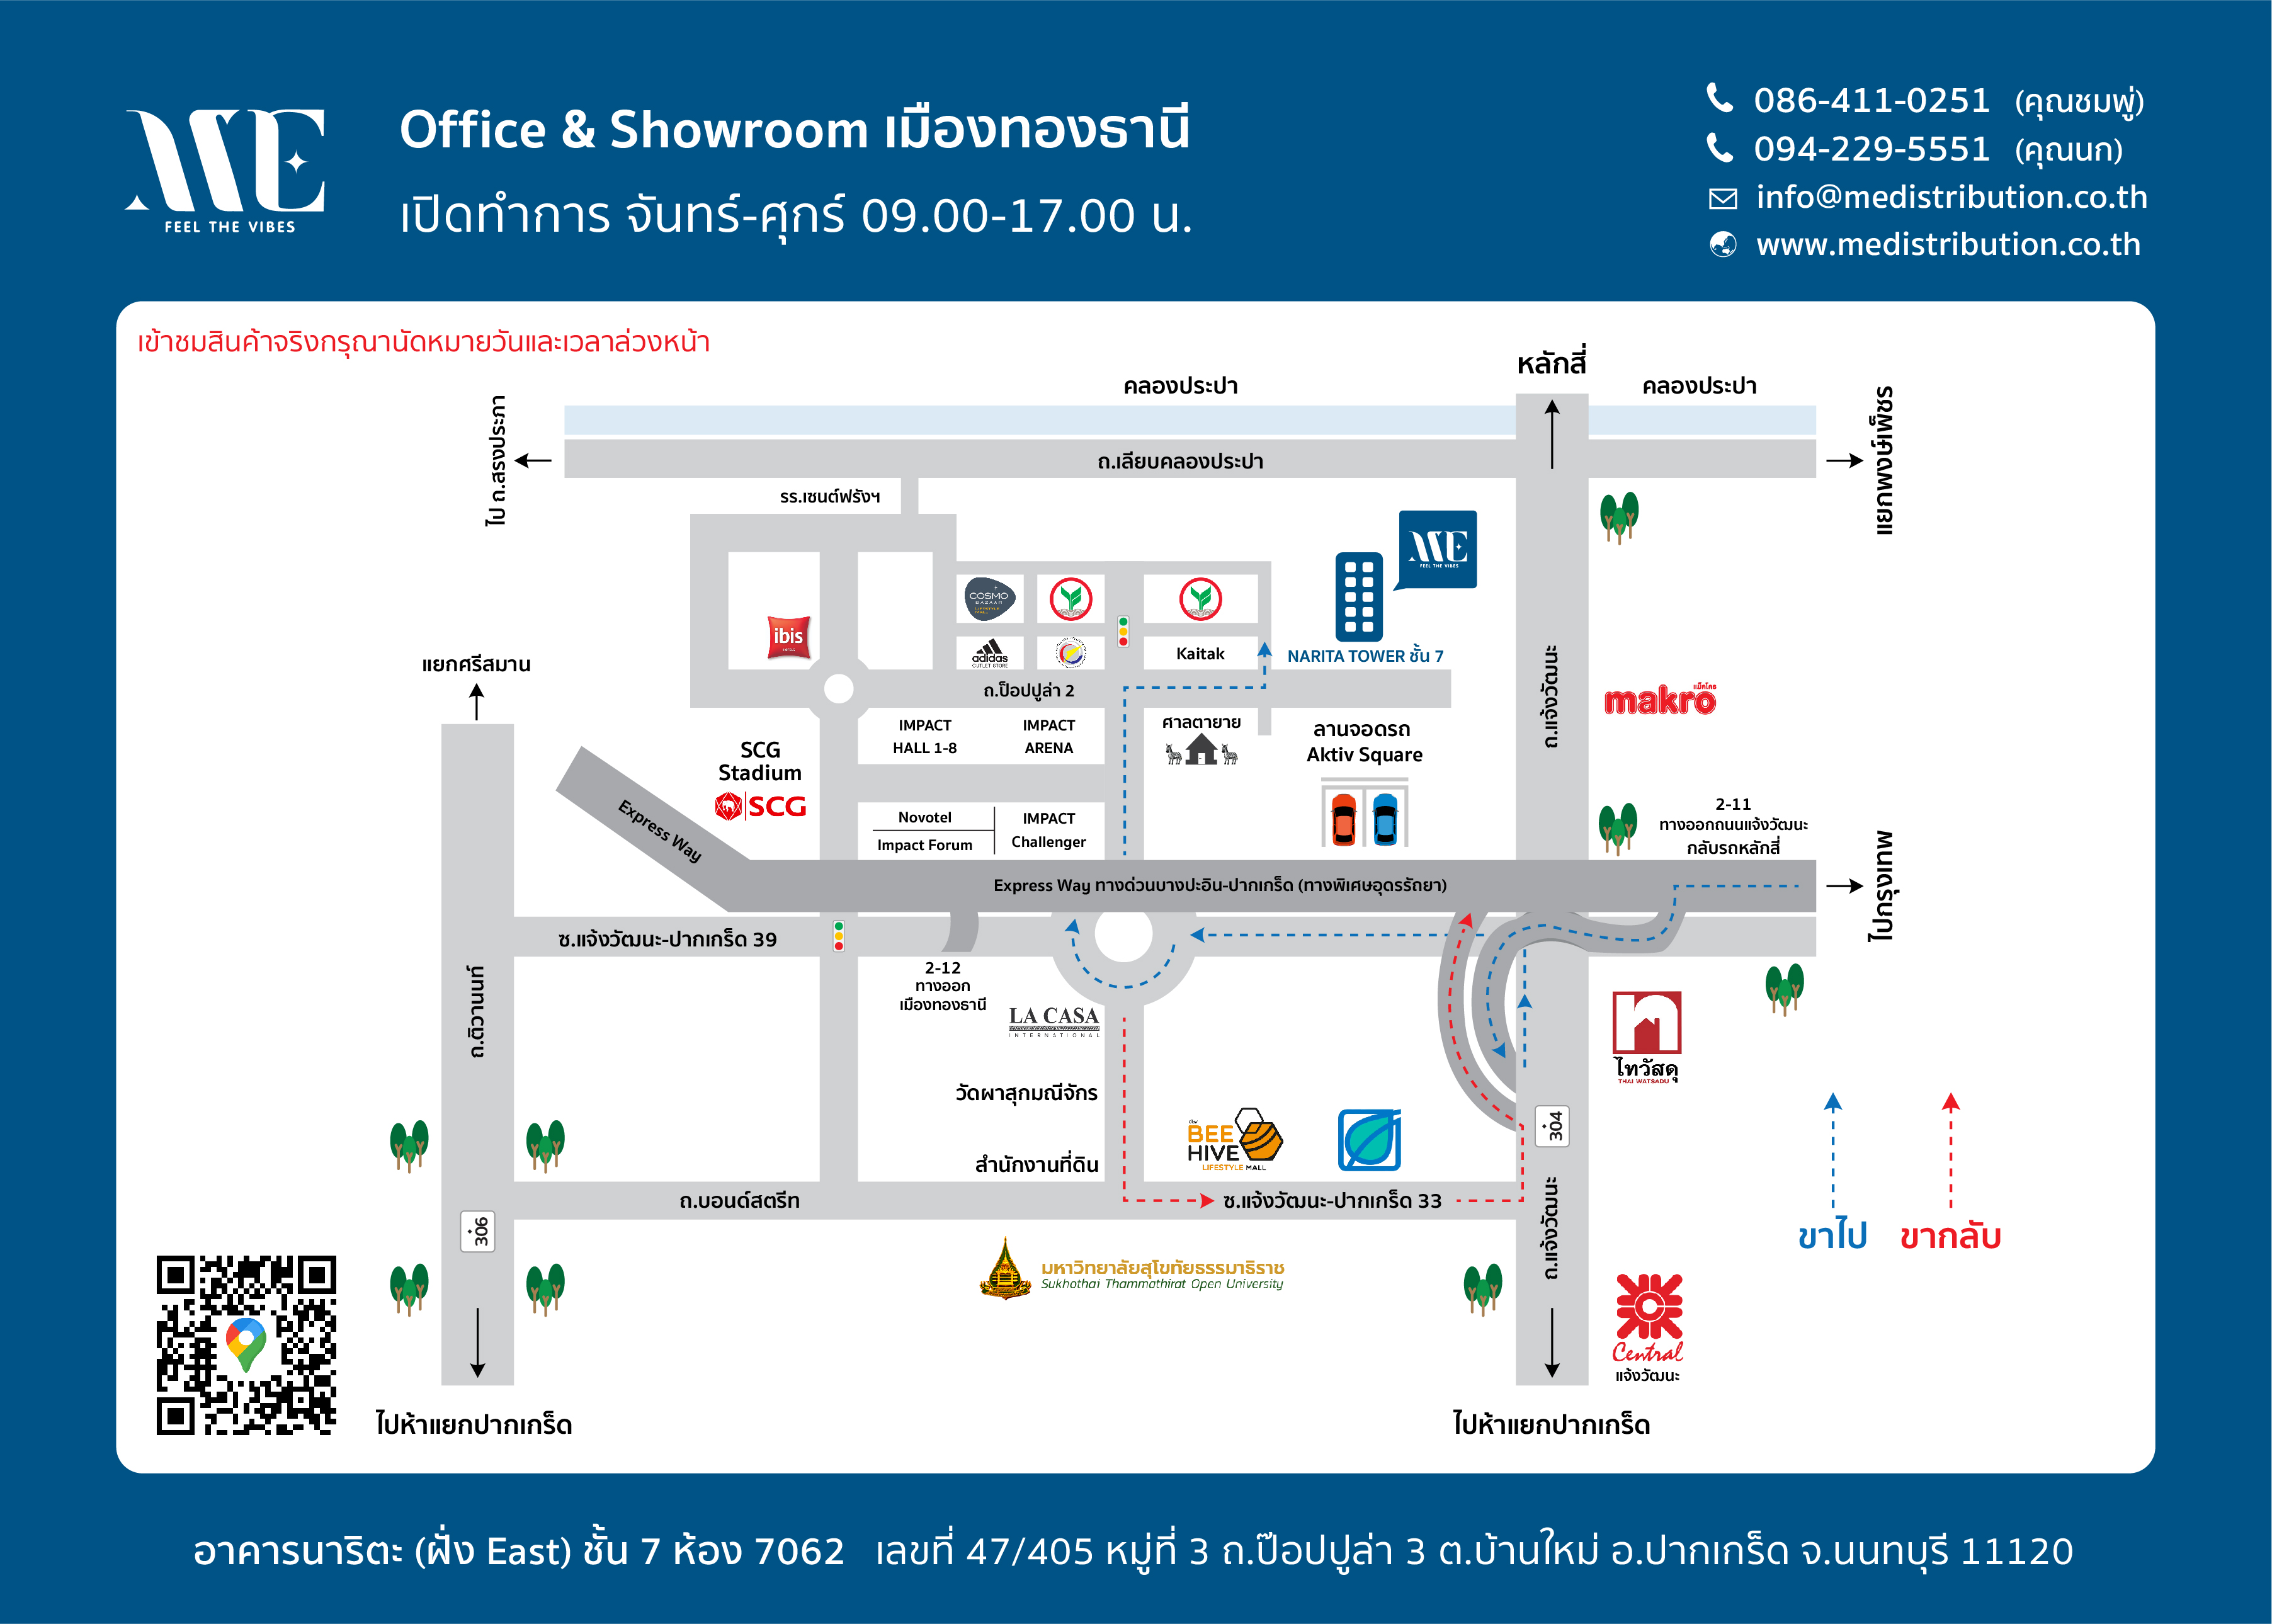 Office & Showroom เมืองทองธานี